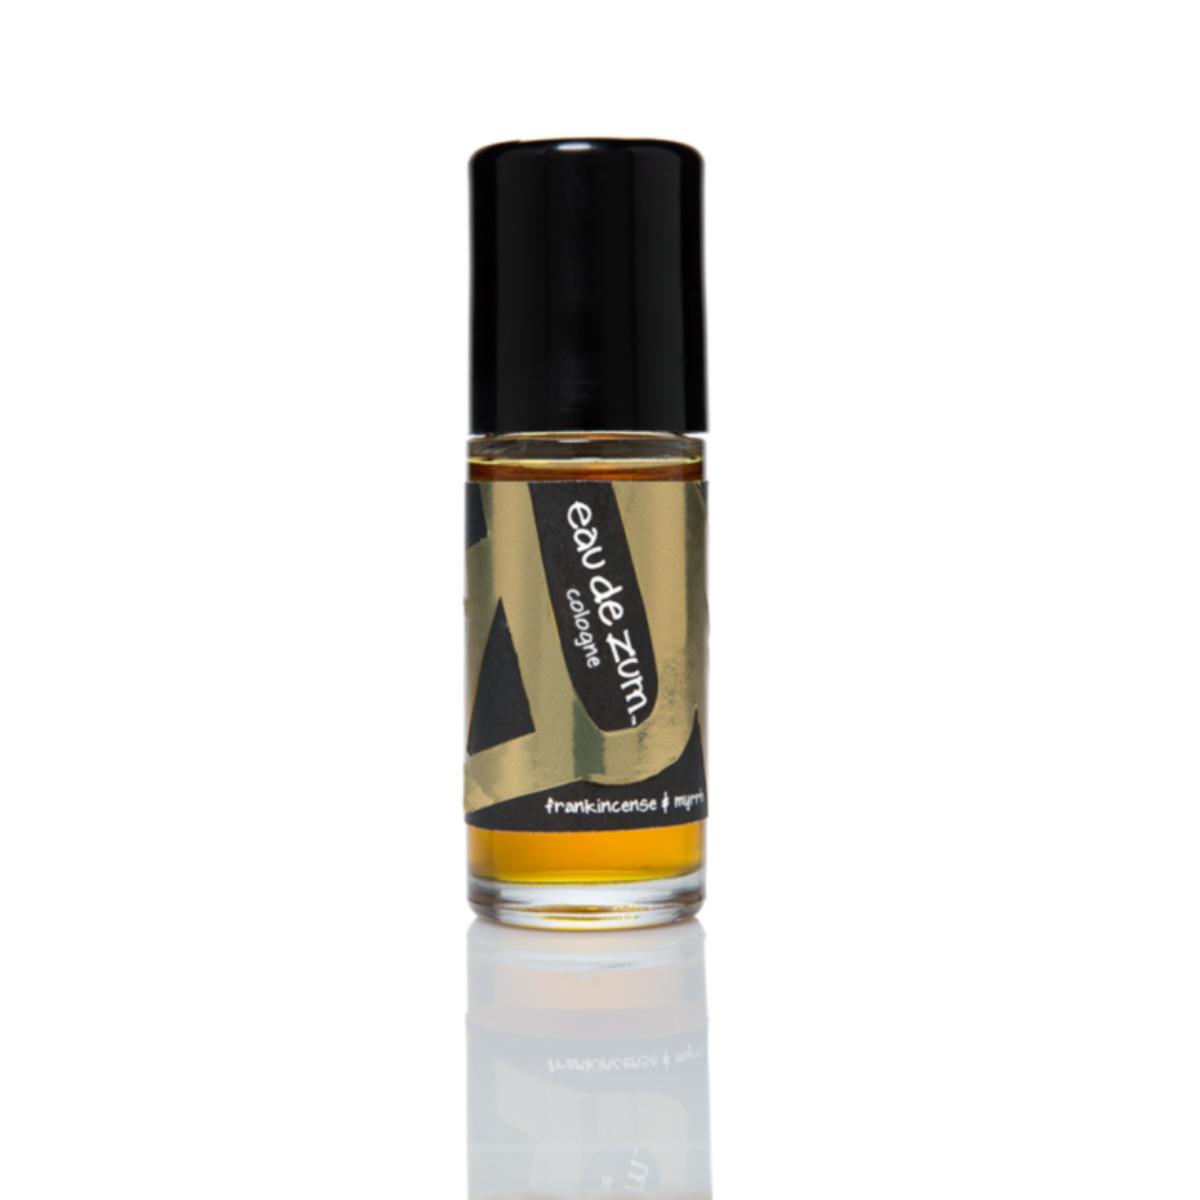 Primary image of Frankincense & Myrrh Perfumed Oil